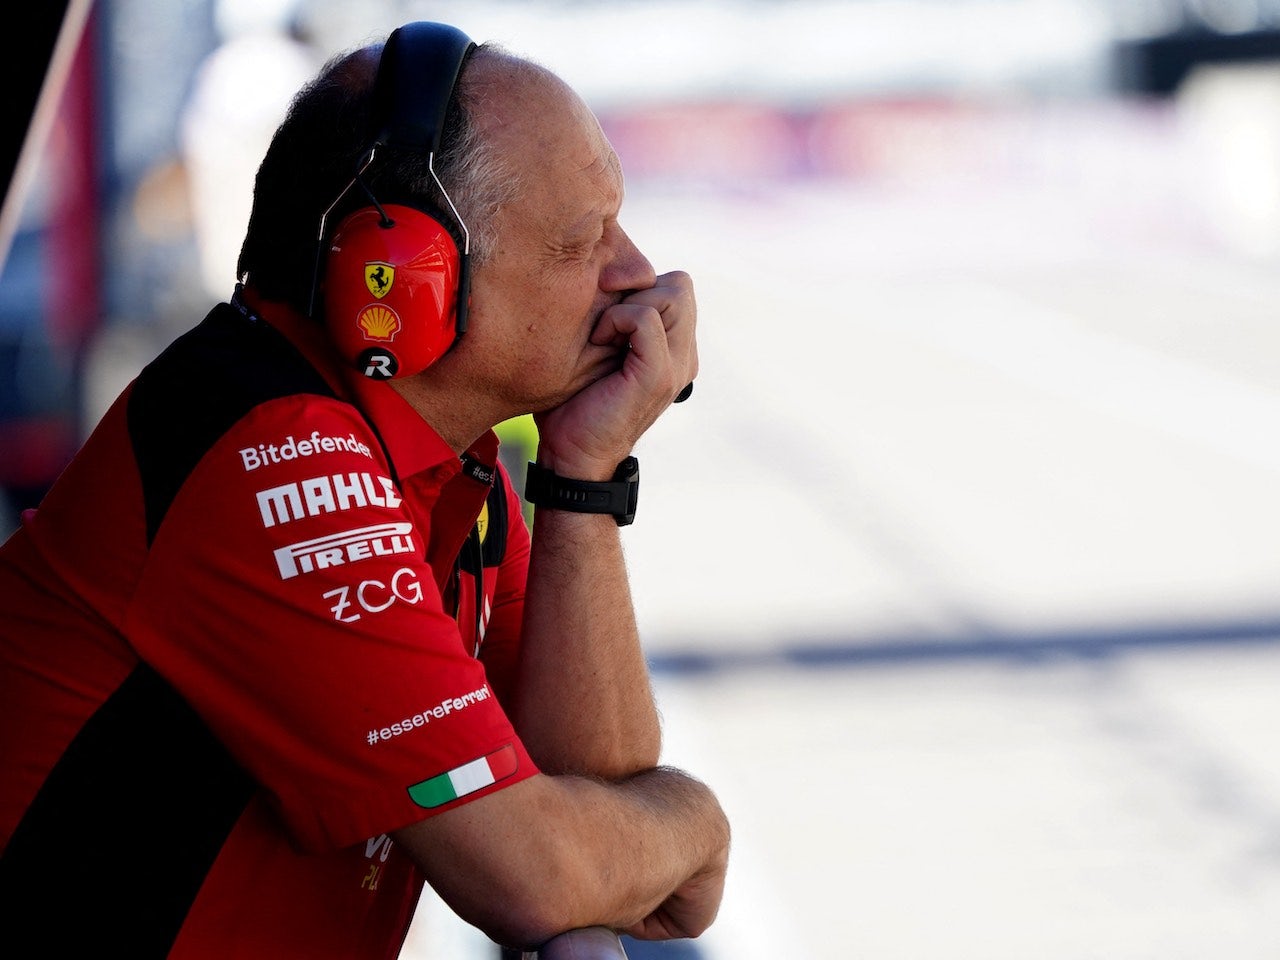 Ferrari raises concerns over Red Bull's testing strategy